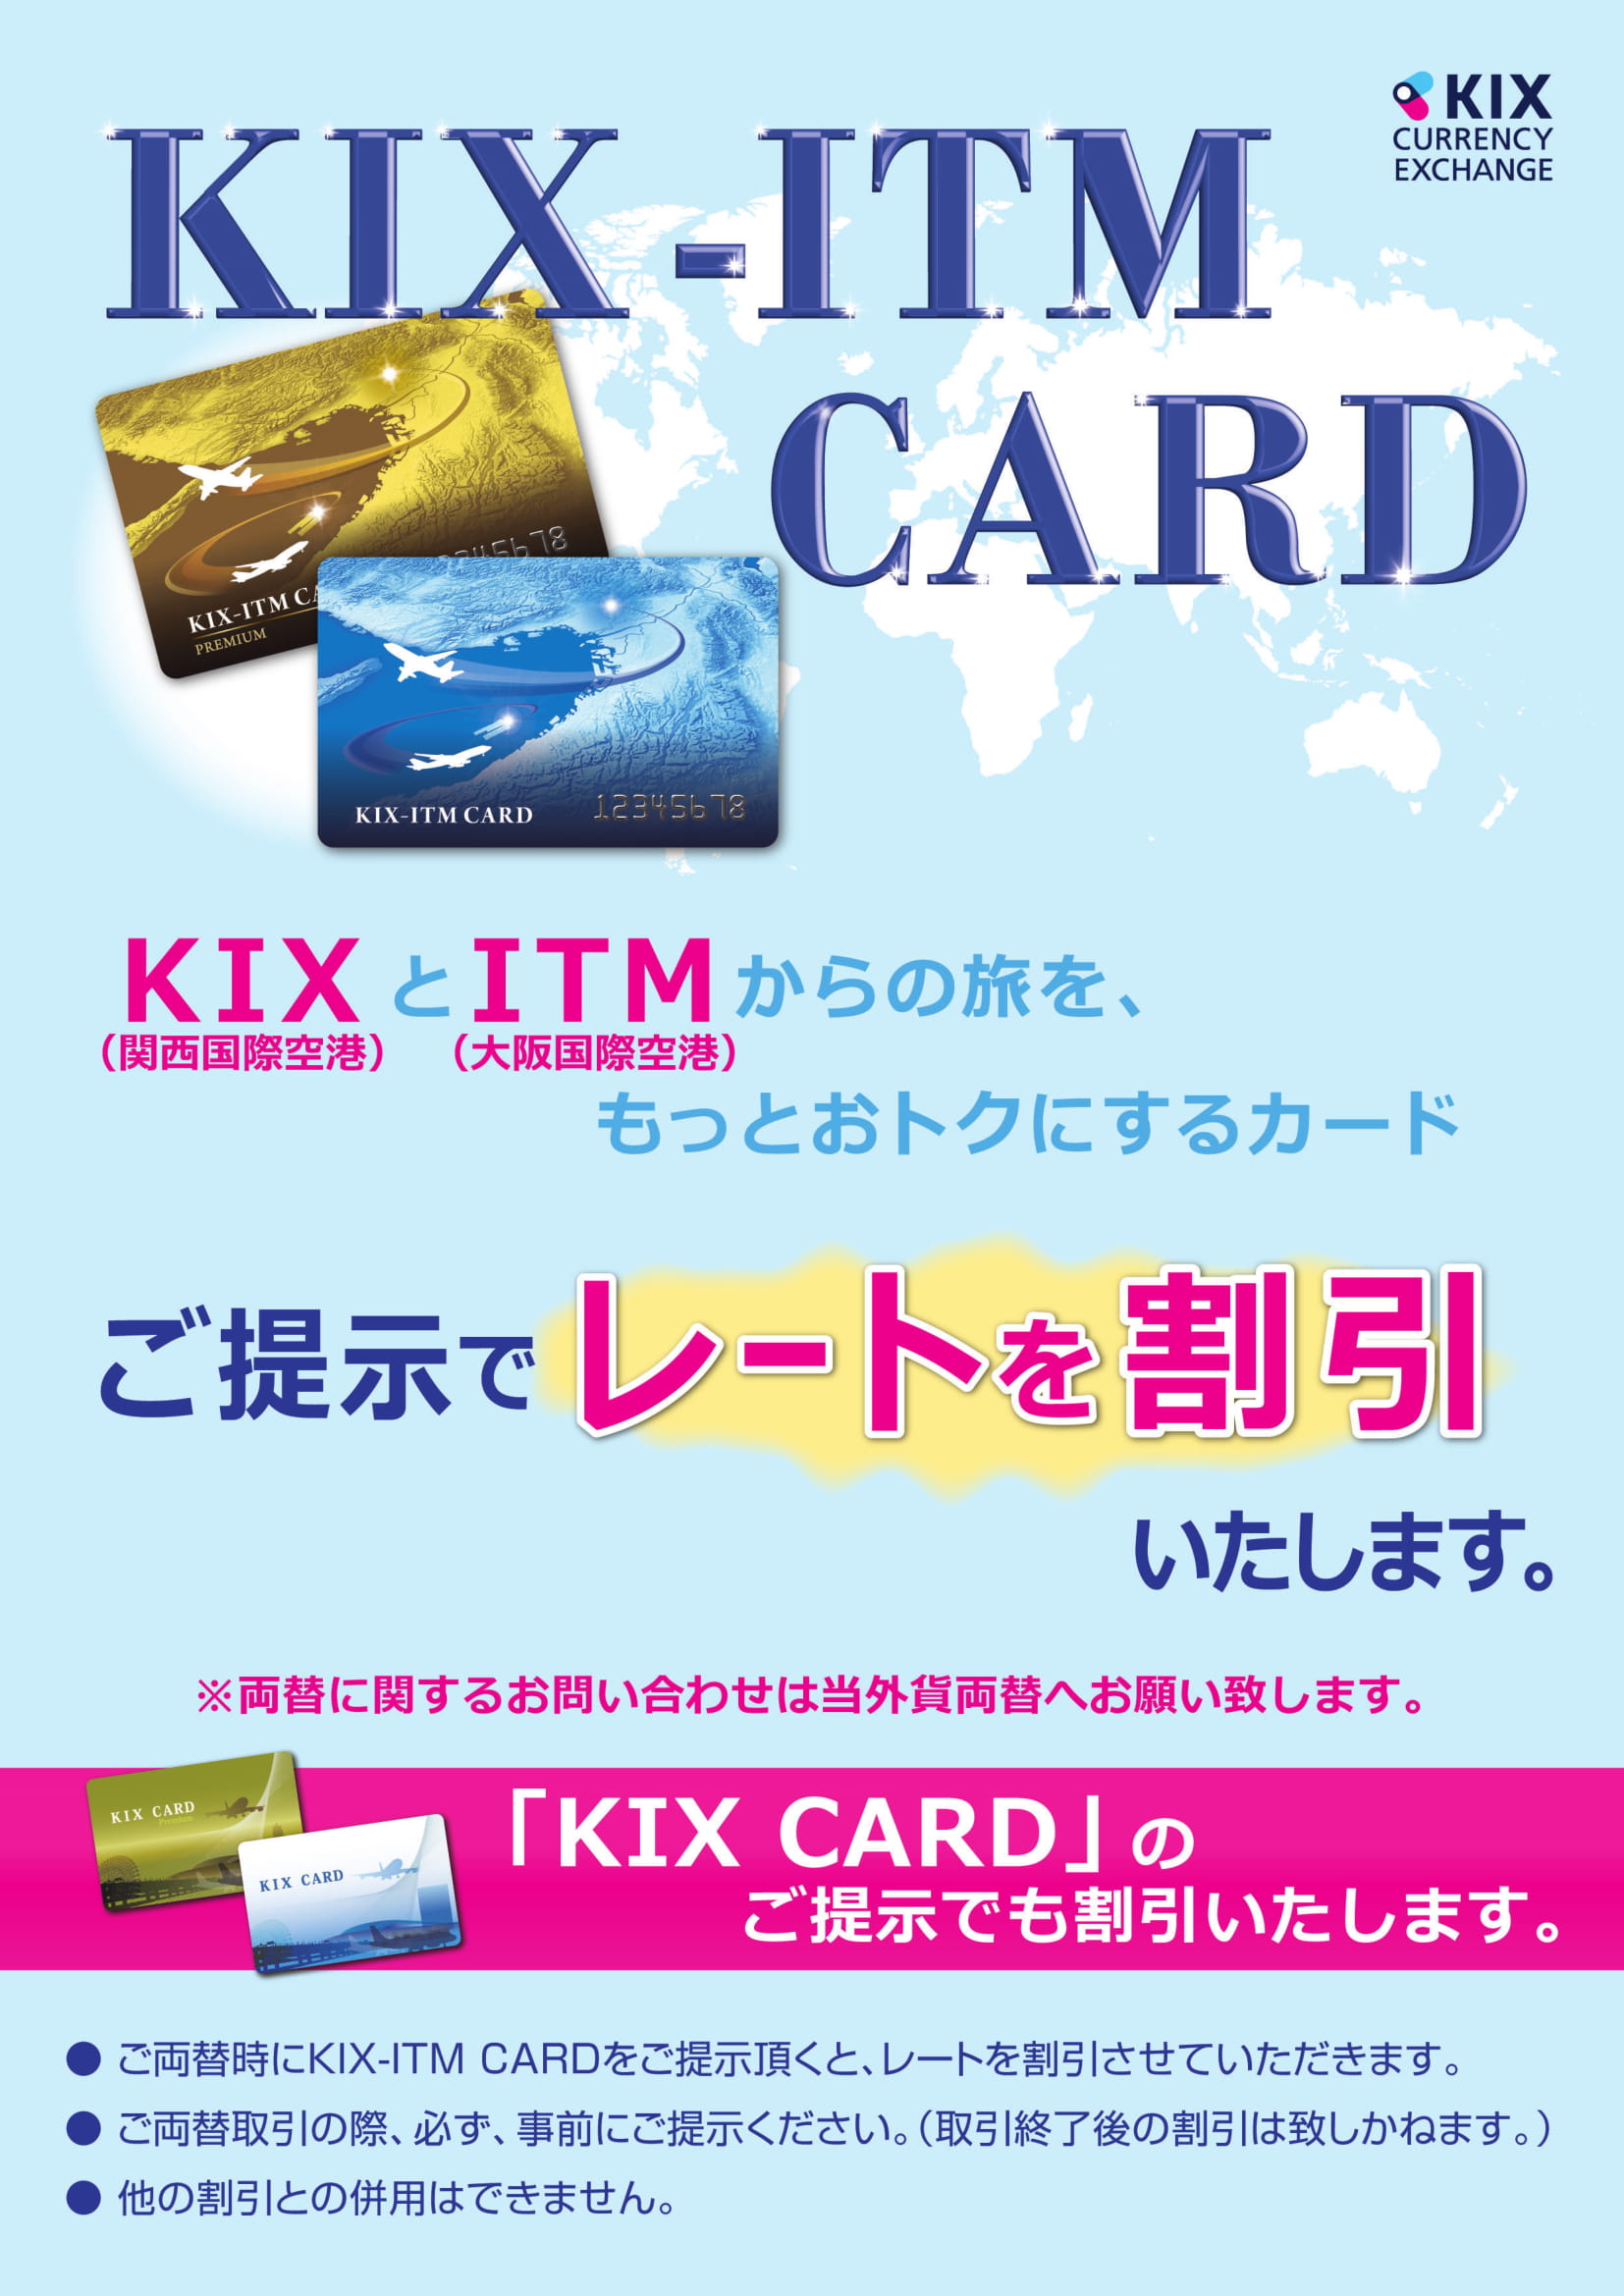 KIX-ITMcard割引のご案内